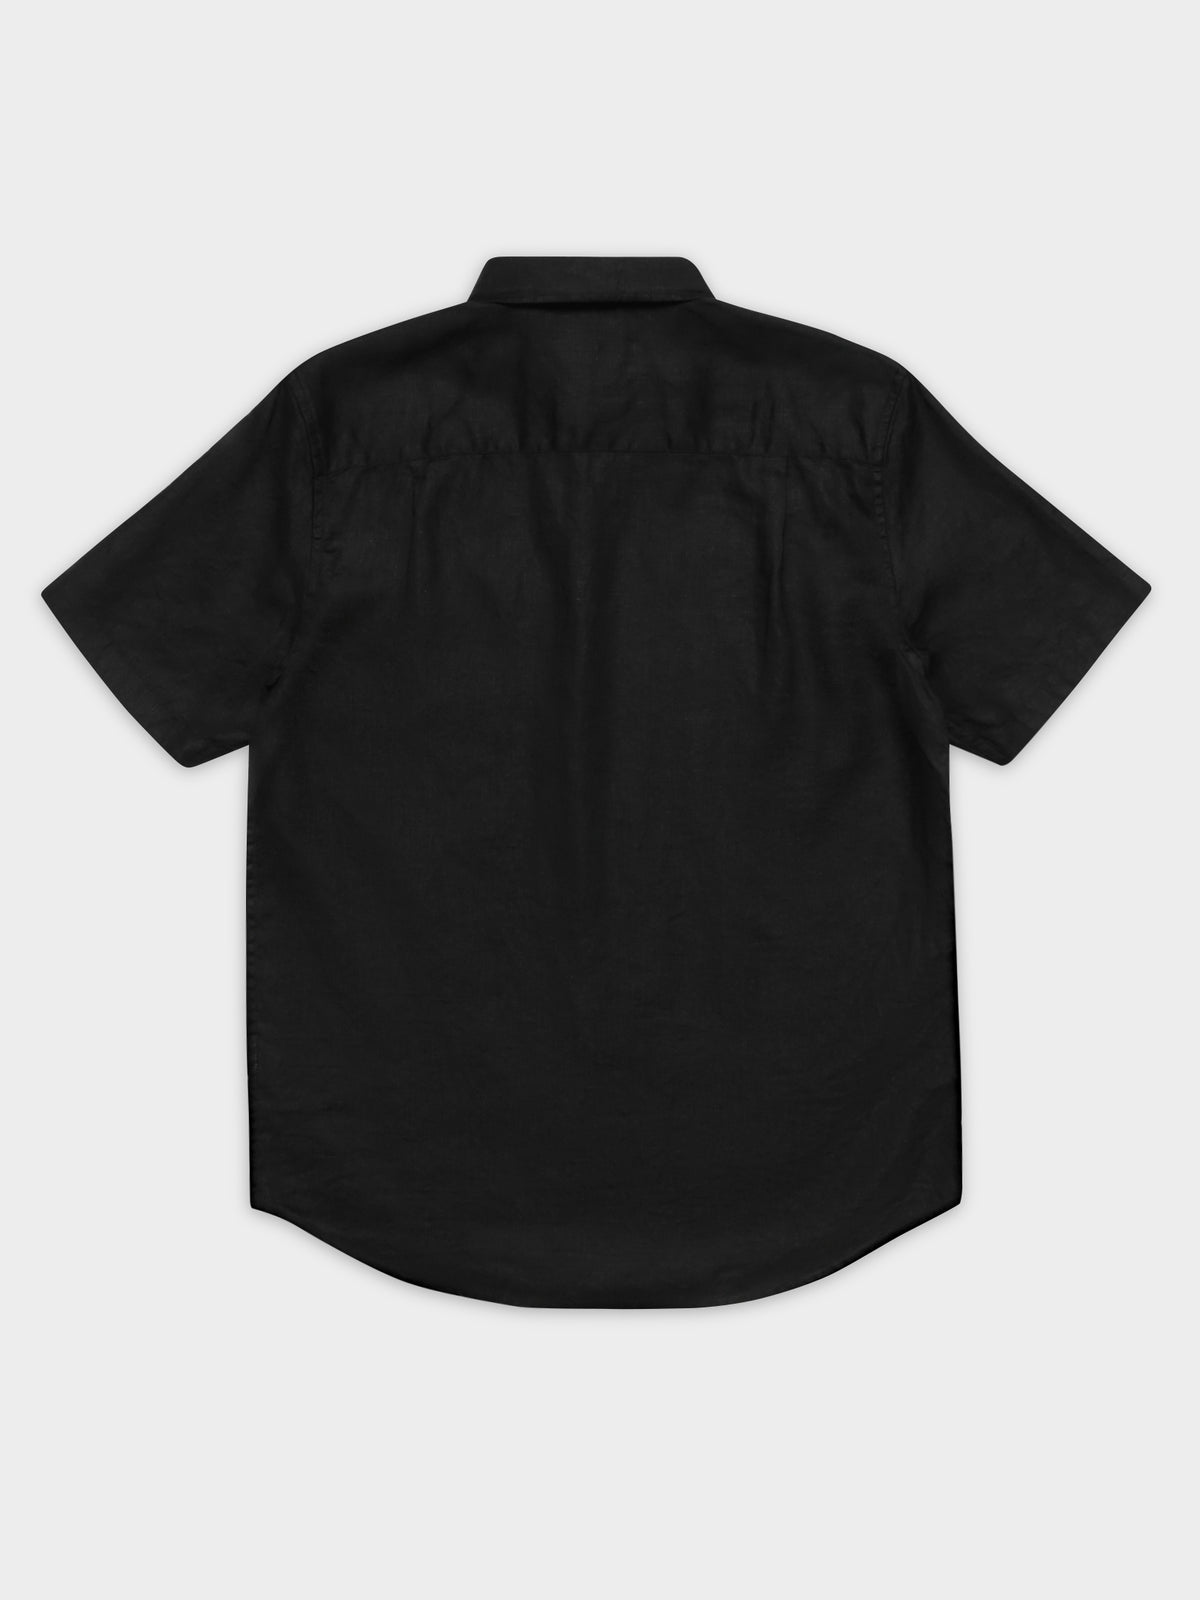 Hampton Linen Short Sleeve T-Shirt in Black